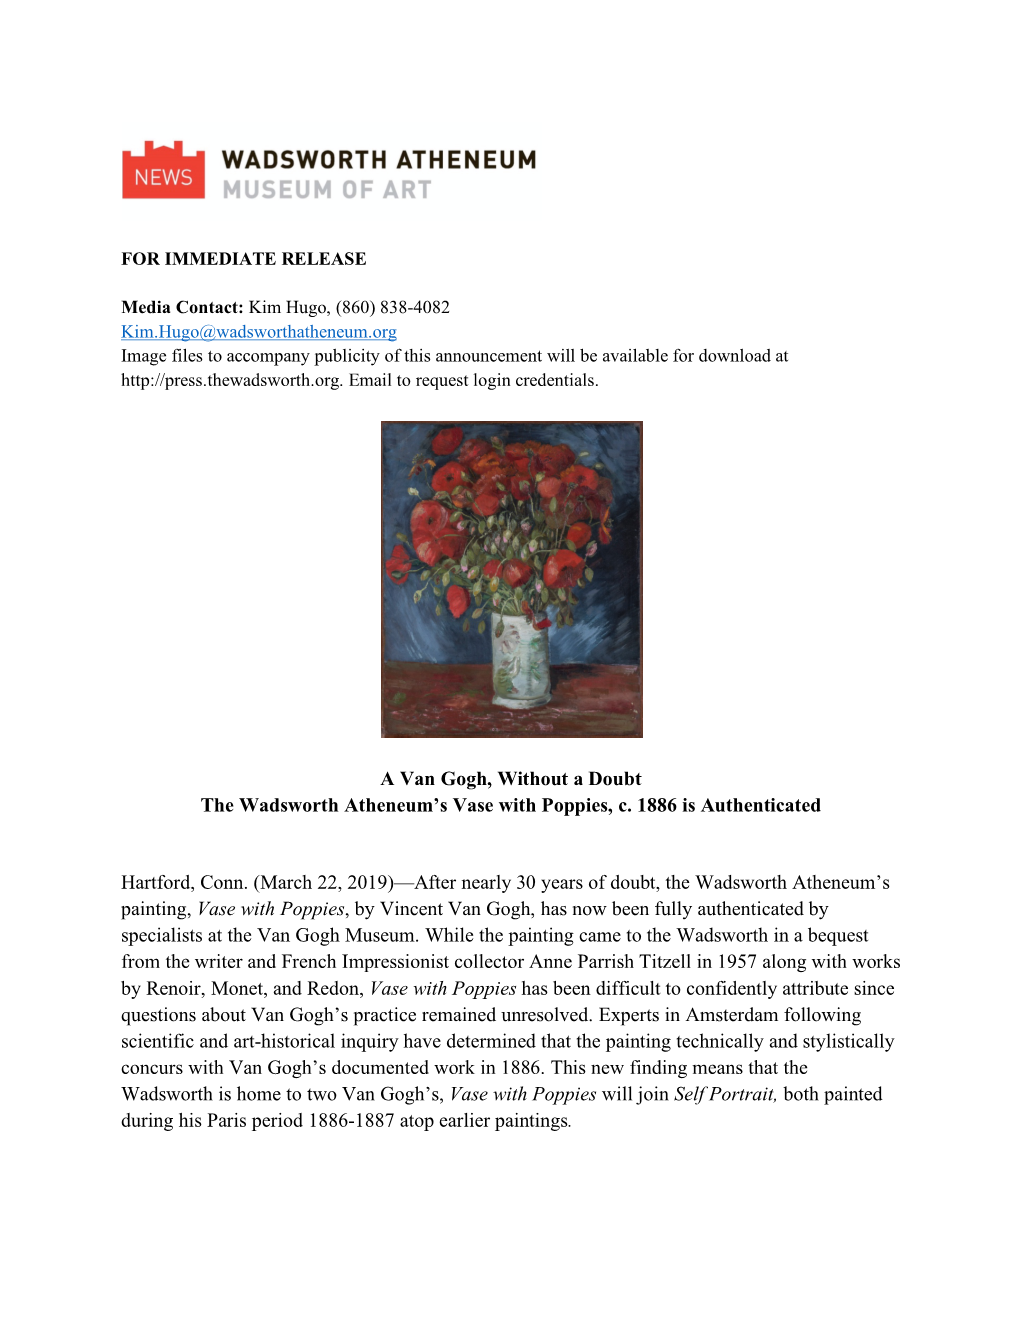 Wadsworth Van Gogh Press Release FINAL